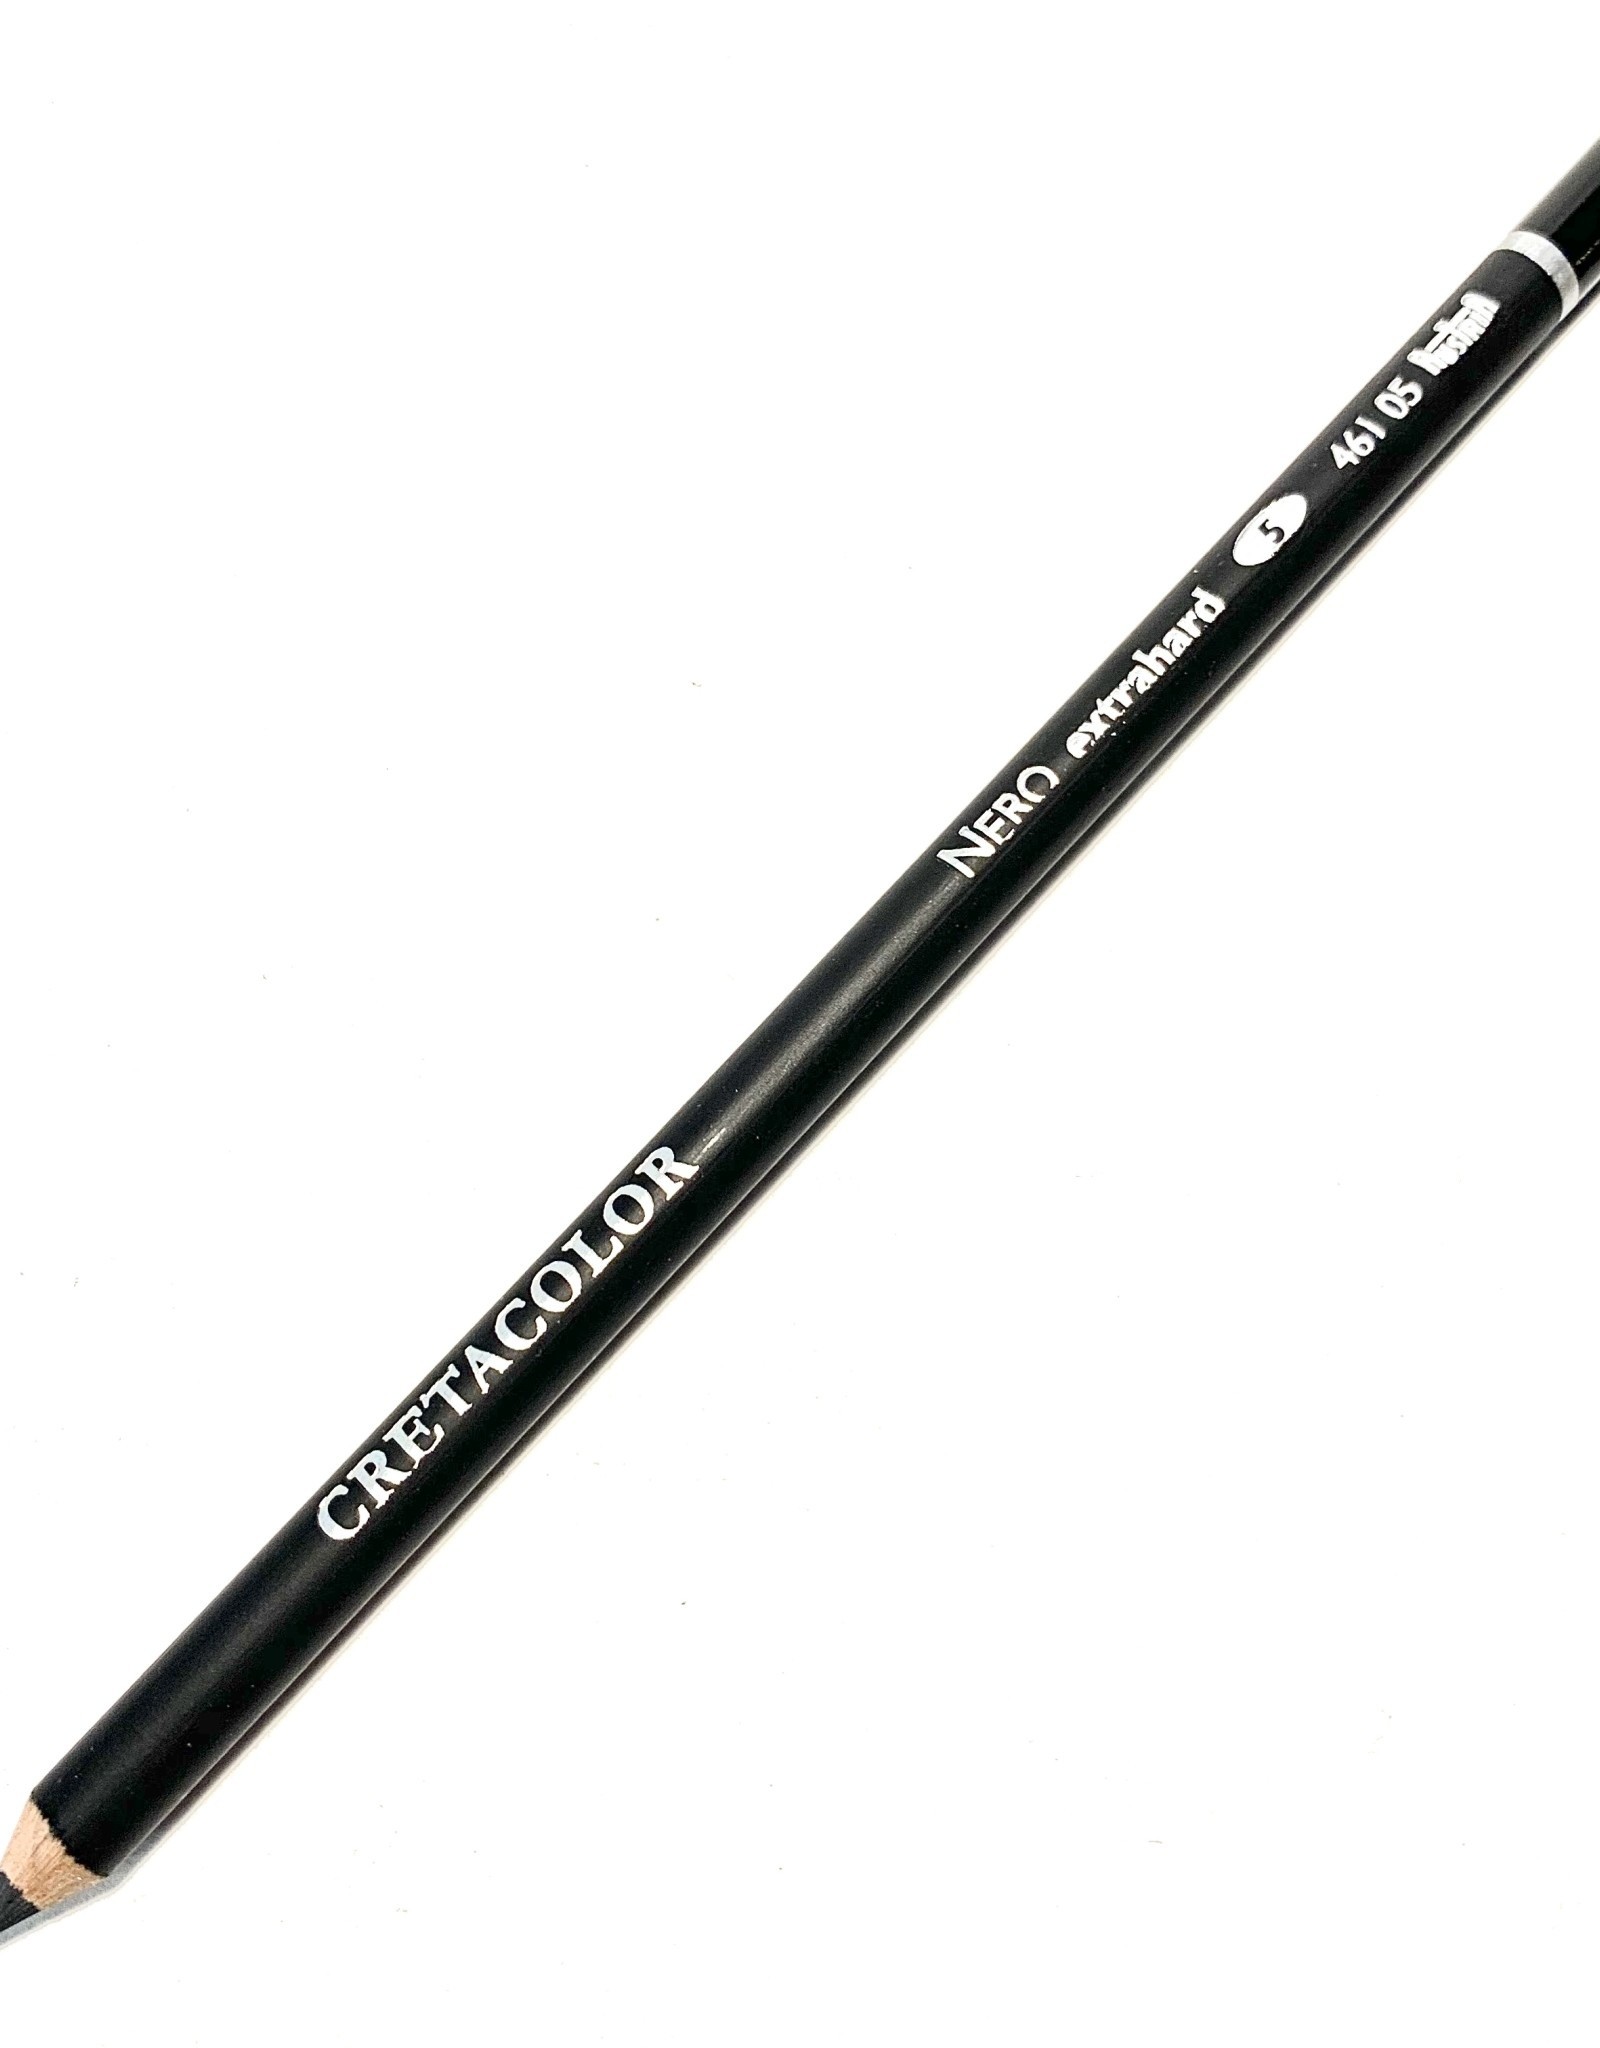 Cretacolor, Nero Charcoal Oil Pencil, Extra Hard